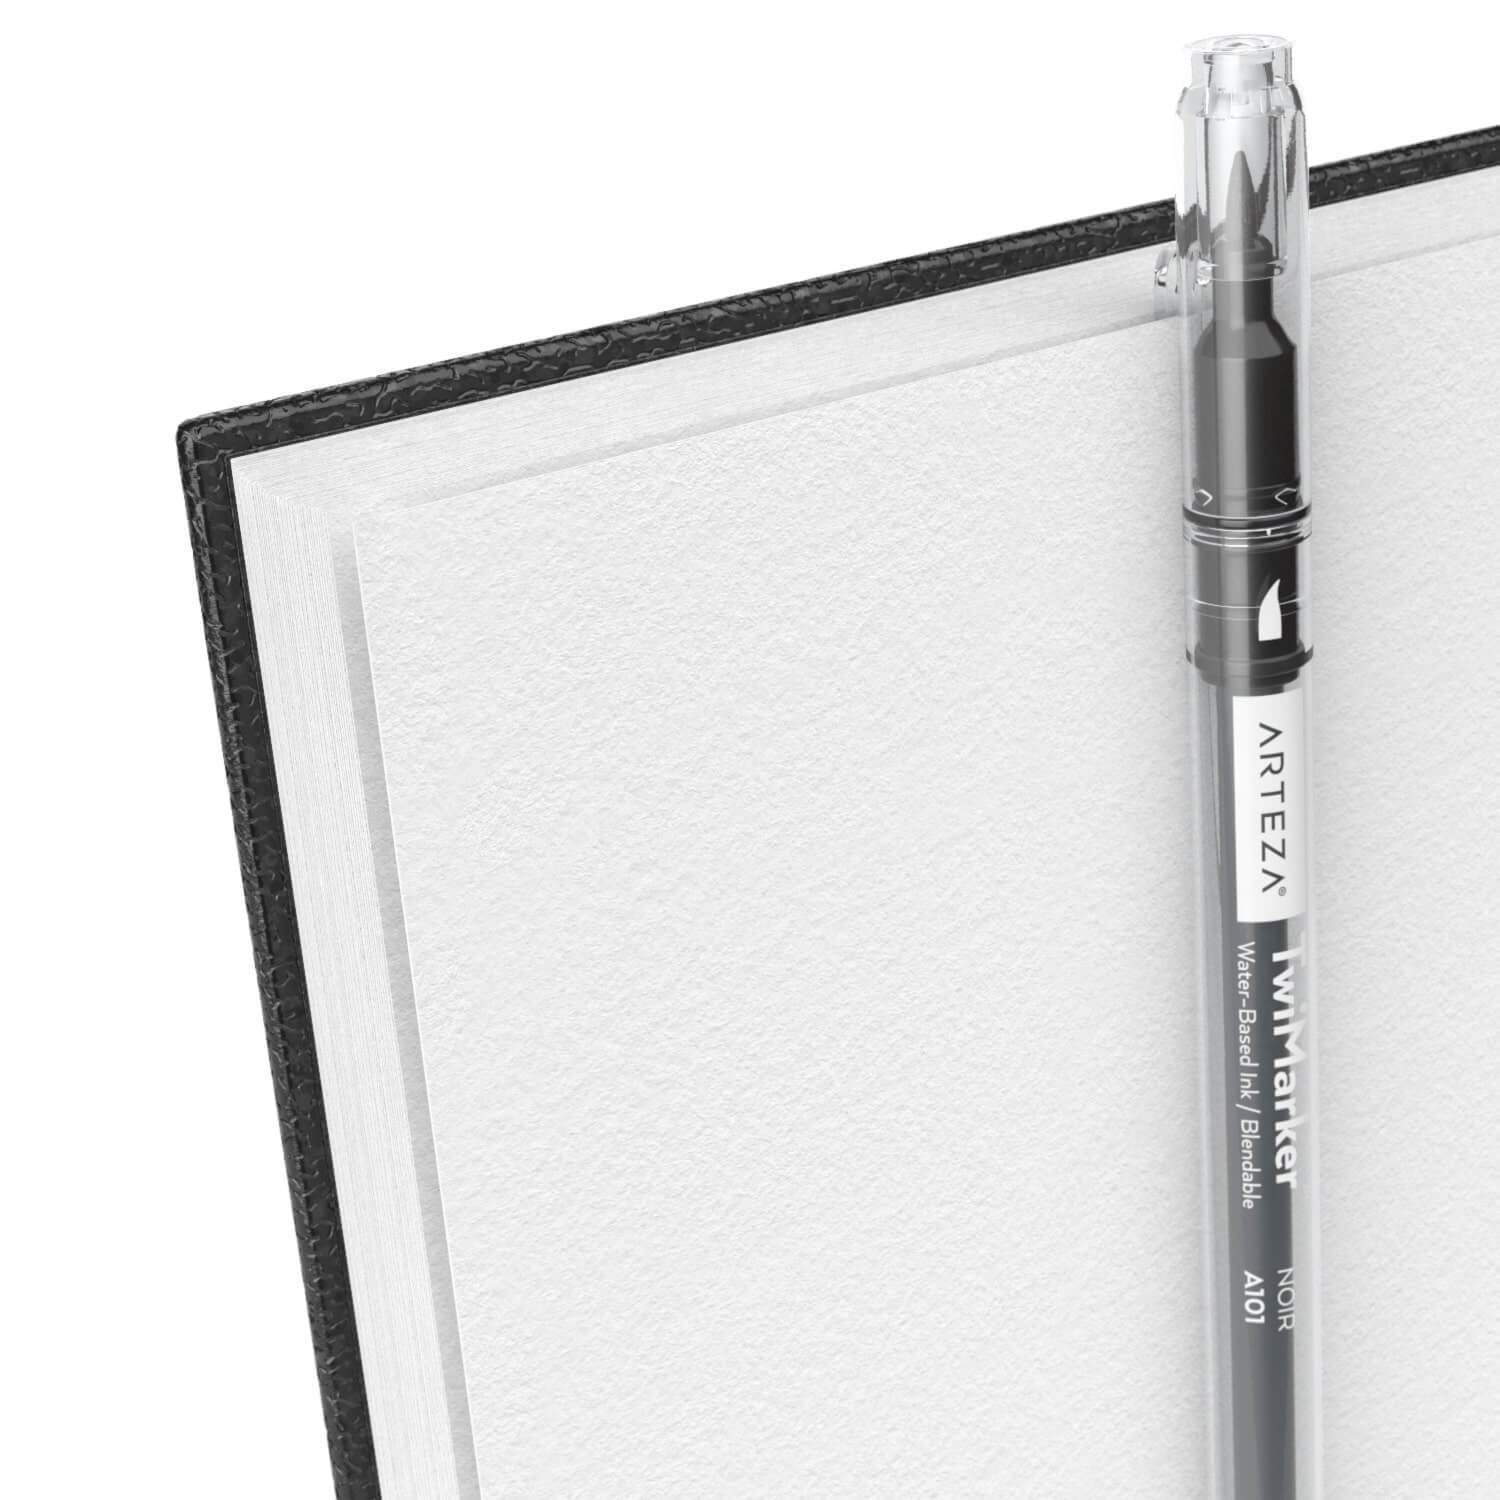 WA Portman A4 Black Paper Sketchbook, 60 Spiral Bound Pages